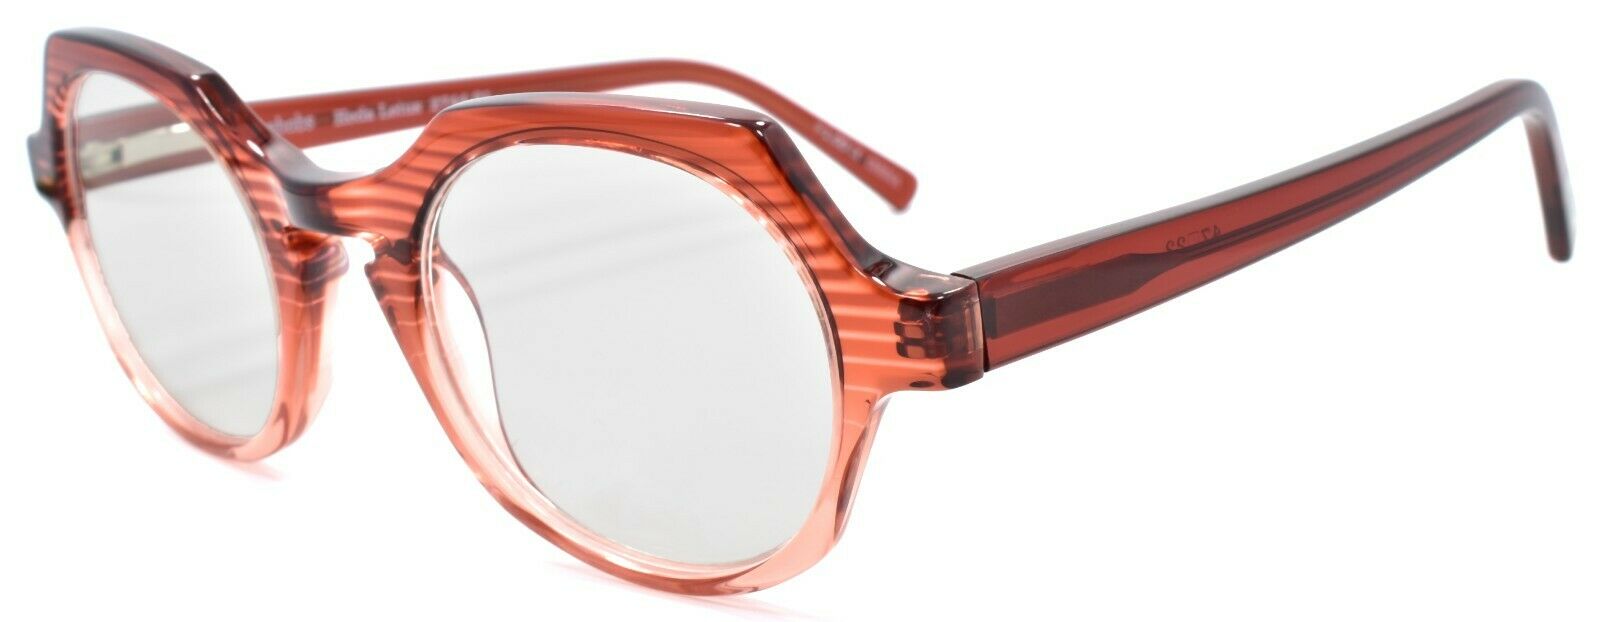 1-Eyebobs Heda Letus 2744 01 Women's Reading Glasses Red / Pink Stripes +1.75-842754159722-IKSpecs